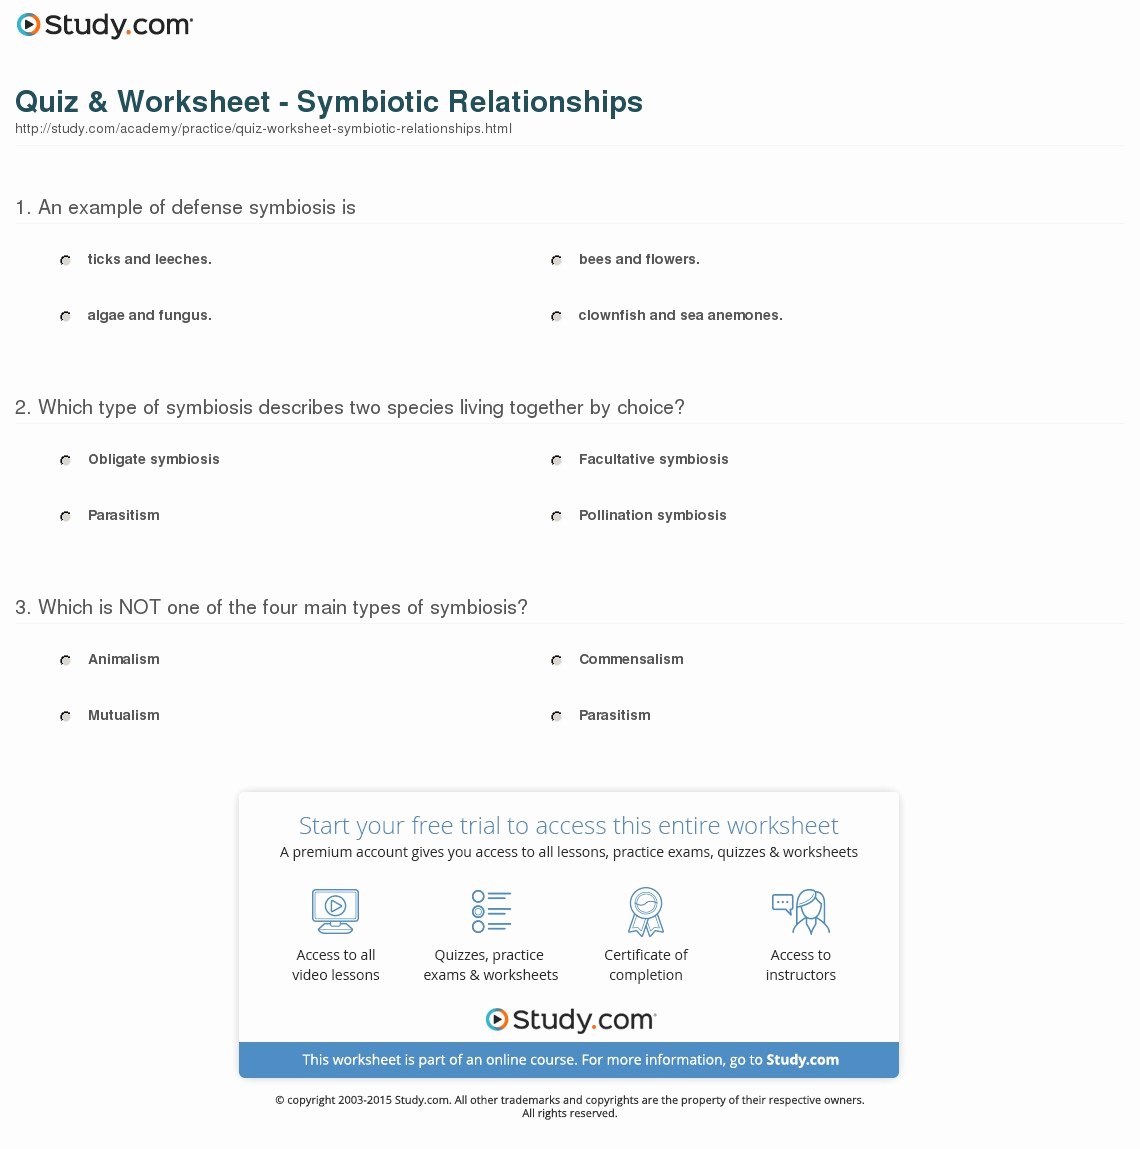 Symbiotic Relationships Worksheet Answers Lovely Quiz &amp; Worksheet Symbiotic Relationships